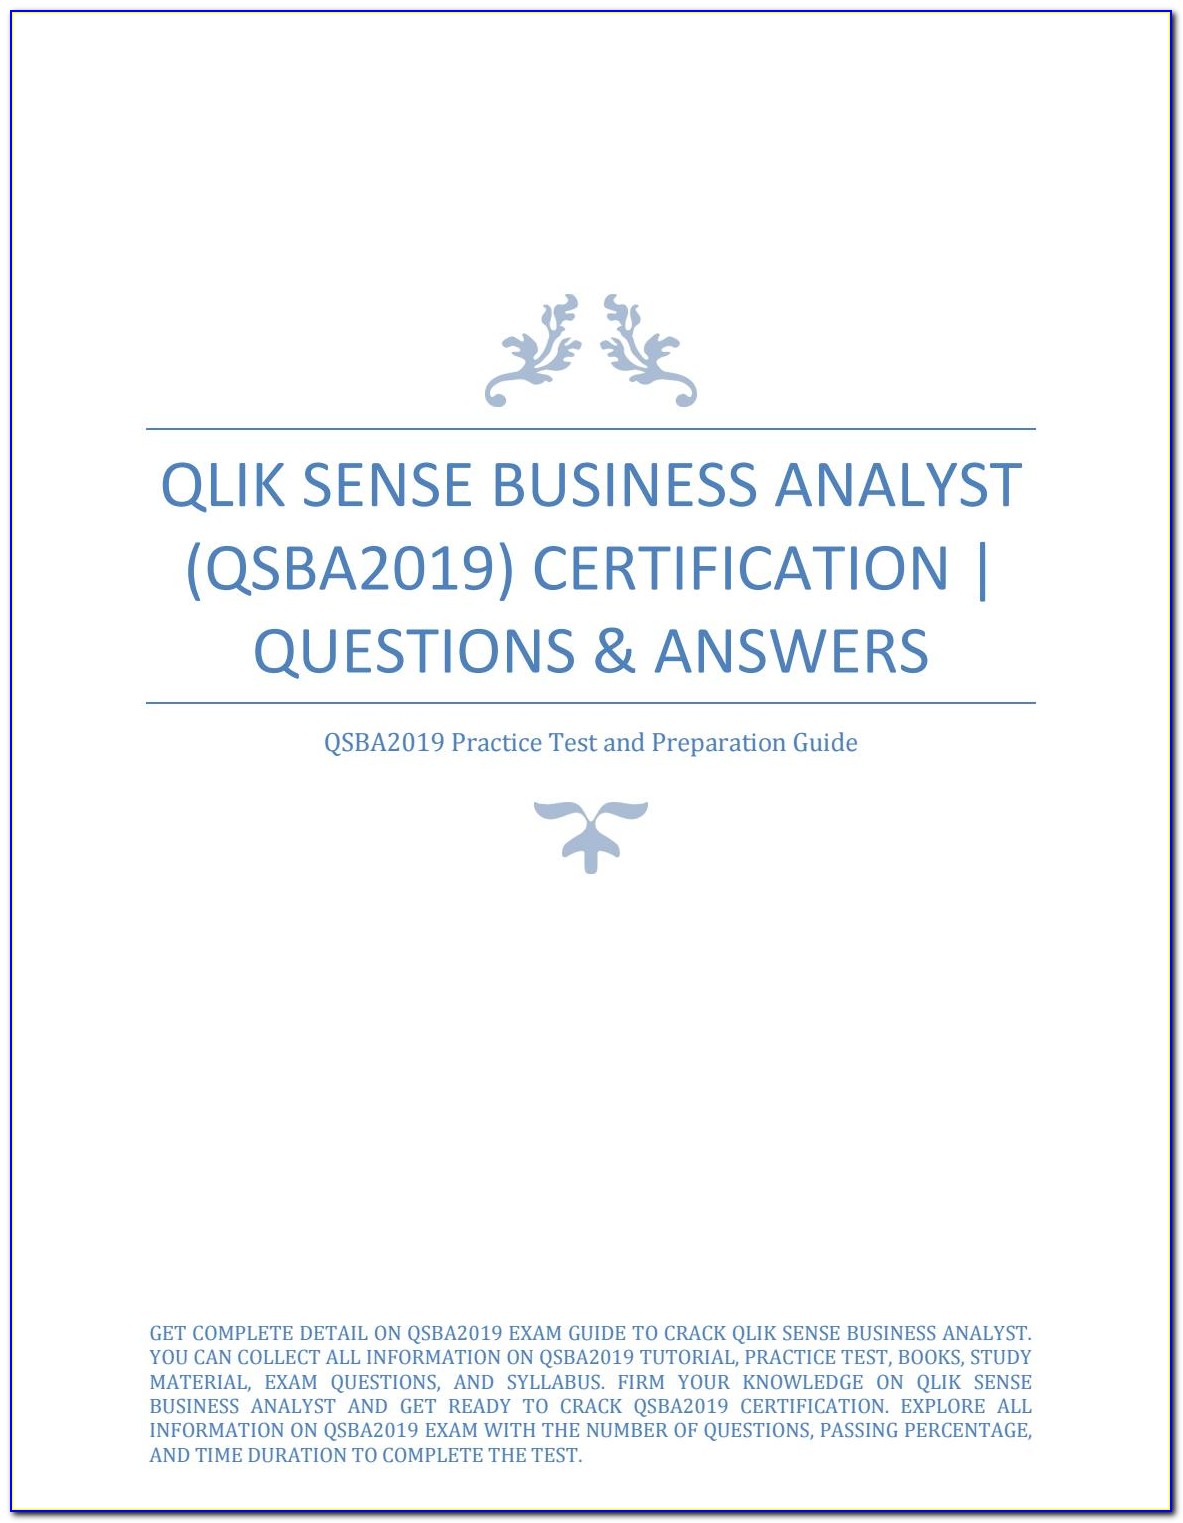 Qlik Sense Business Analyst Certification Exam Questions